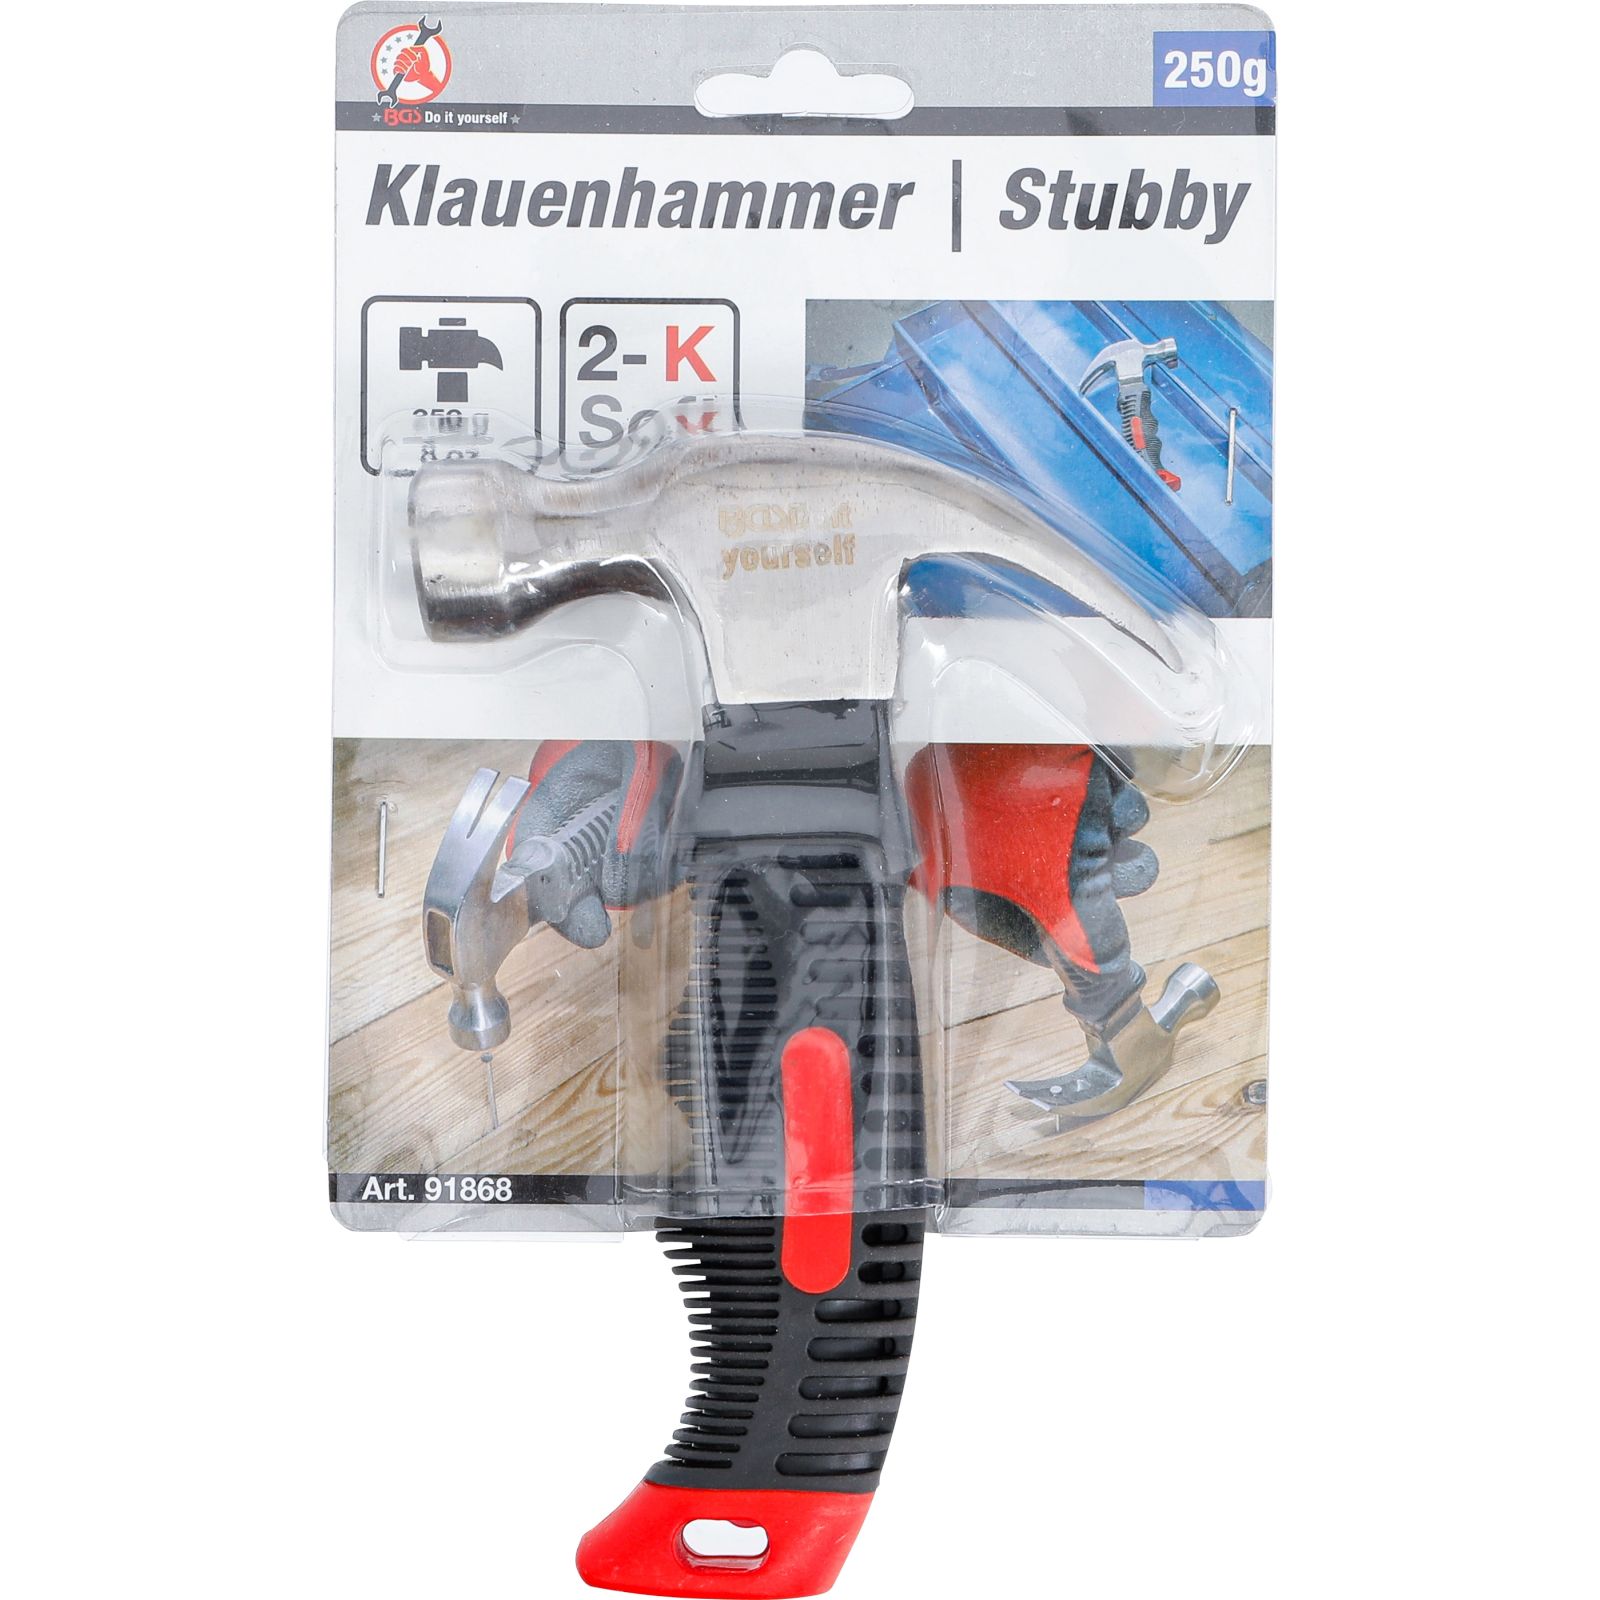 BGS DIY 91868 Mini Klauenhammer / Stubby 250g